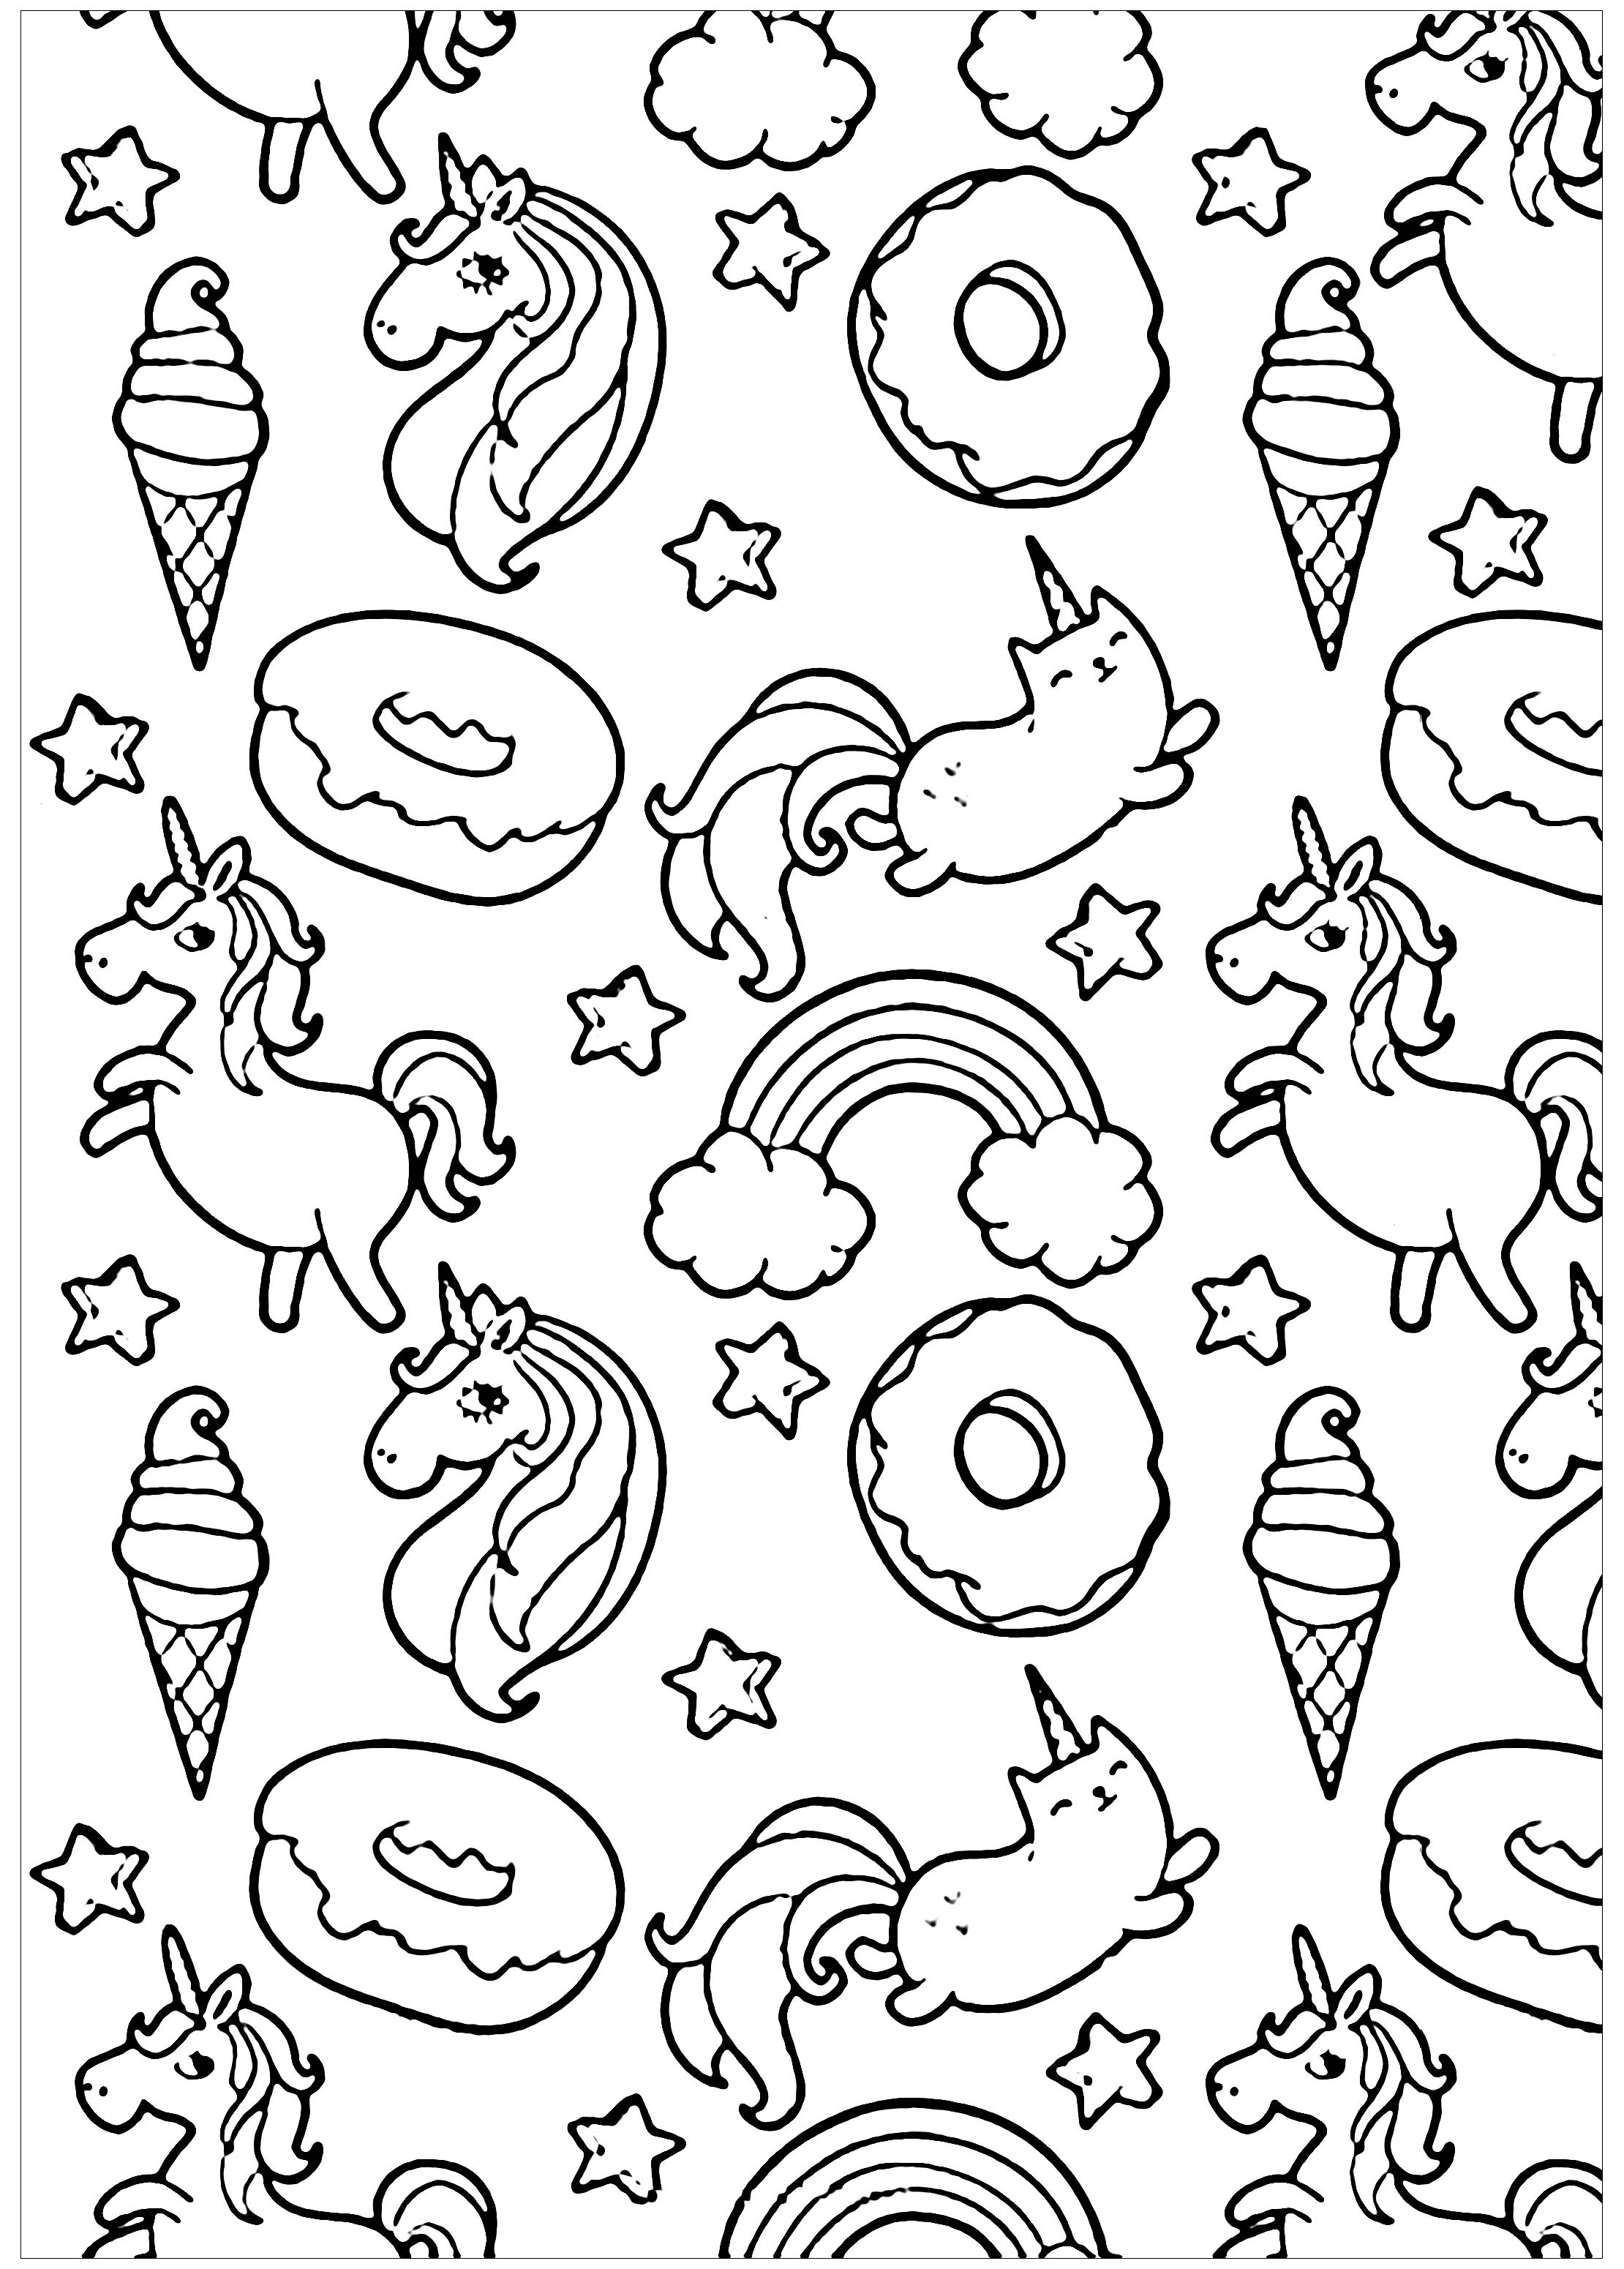 Pusheen donuts and unicorn - Doodle Art / Doodling Adult ...